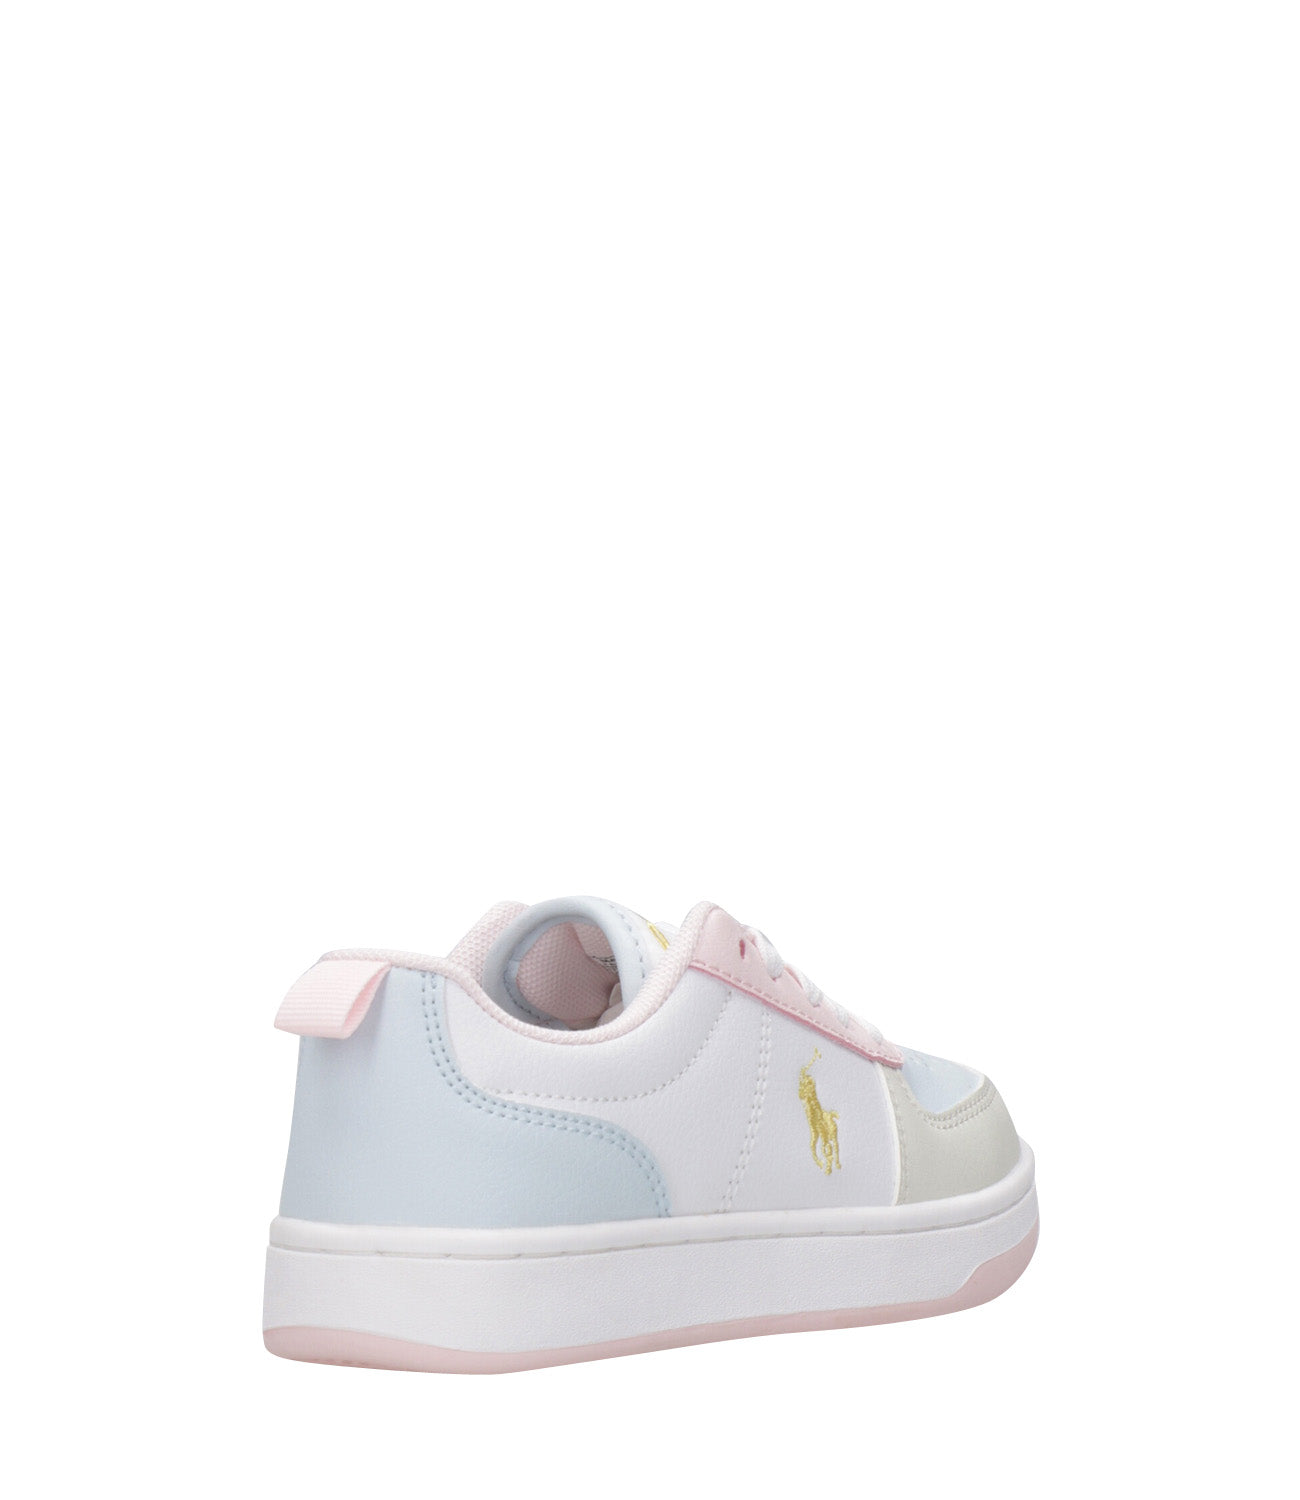 Ralph Lauren Childrenswear | Court II Sneakers White and Pink